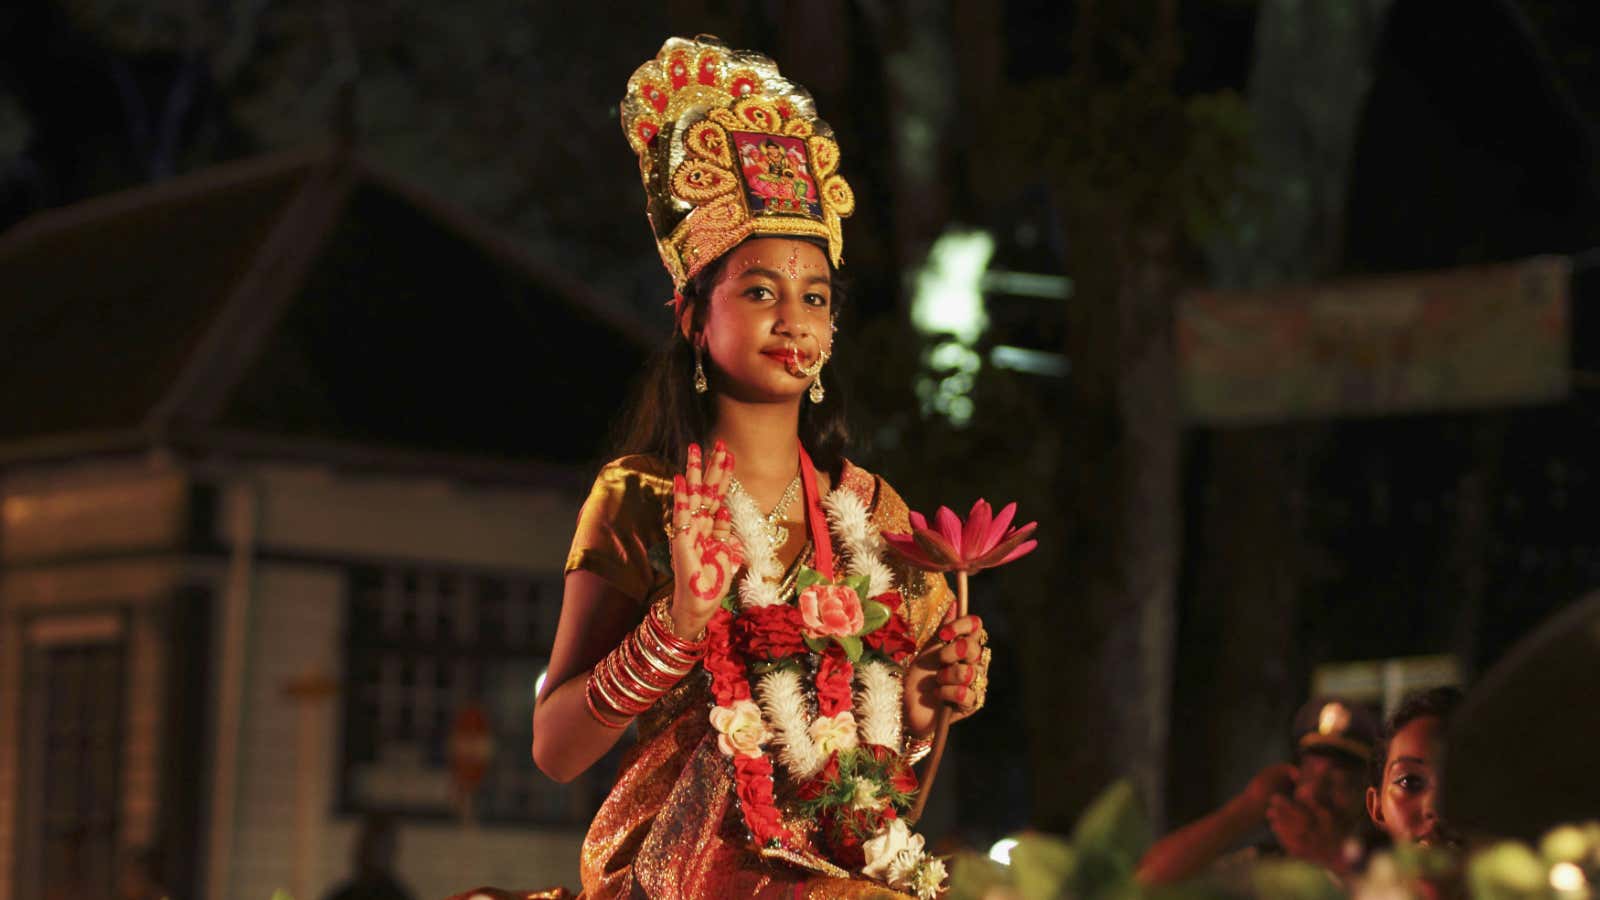 A girl dressed as Lakshmi, the Hindu goddess of wealth.